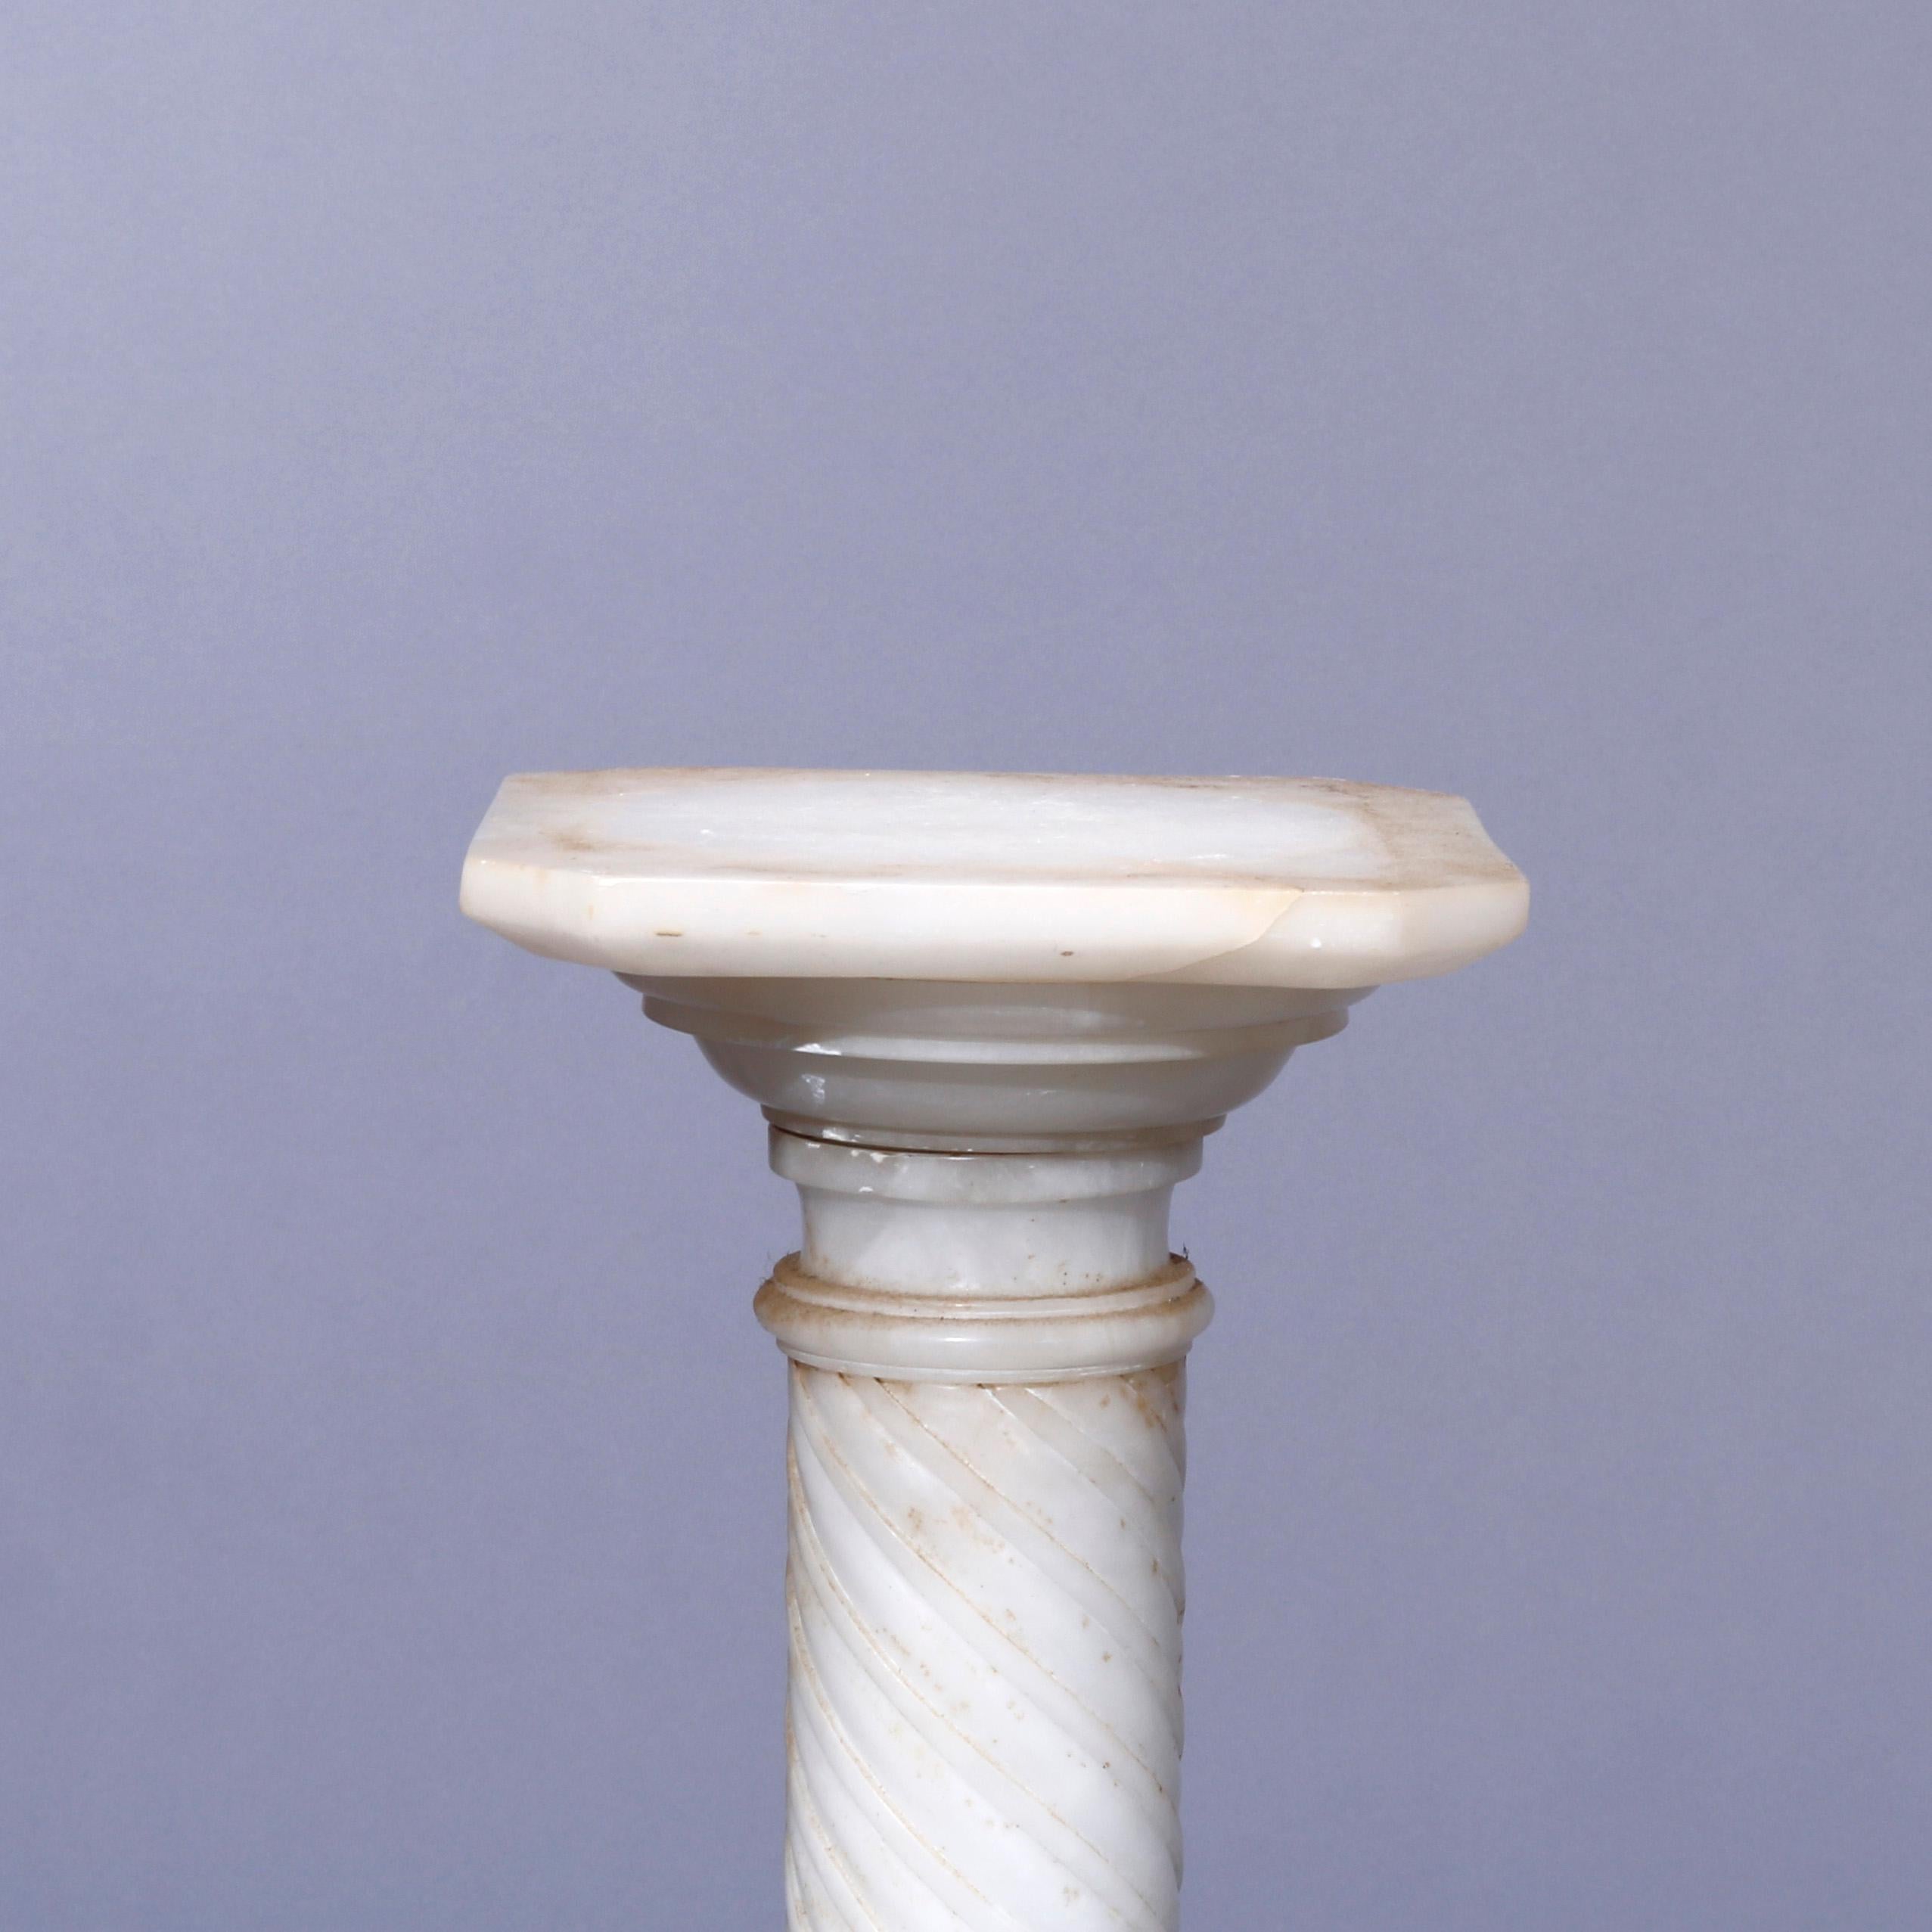 Antique Neoclassical Carved Alabaster Sculpture Pedestal, Rope Twist Form, 1890 For Sale 3